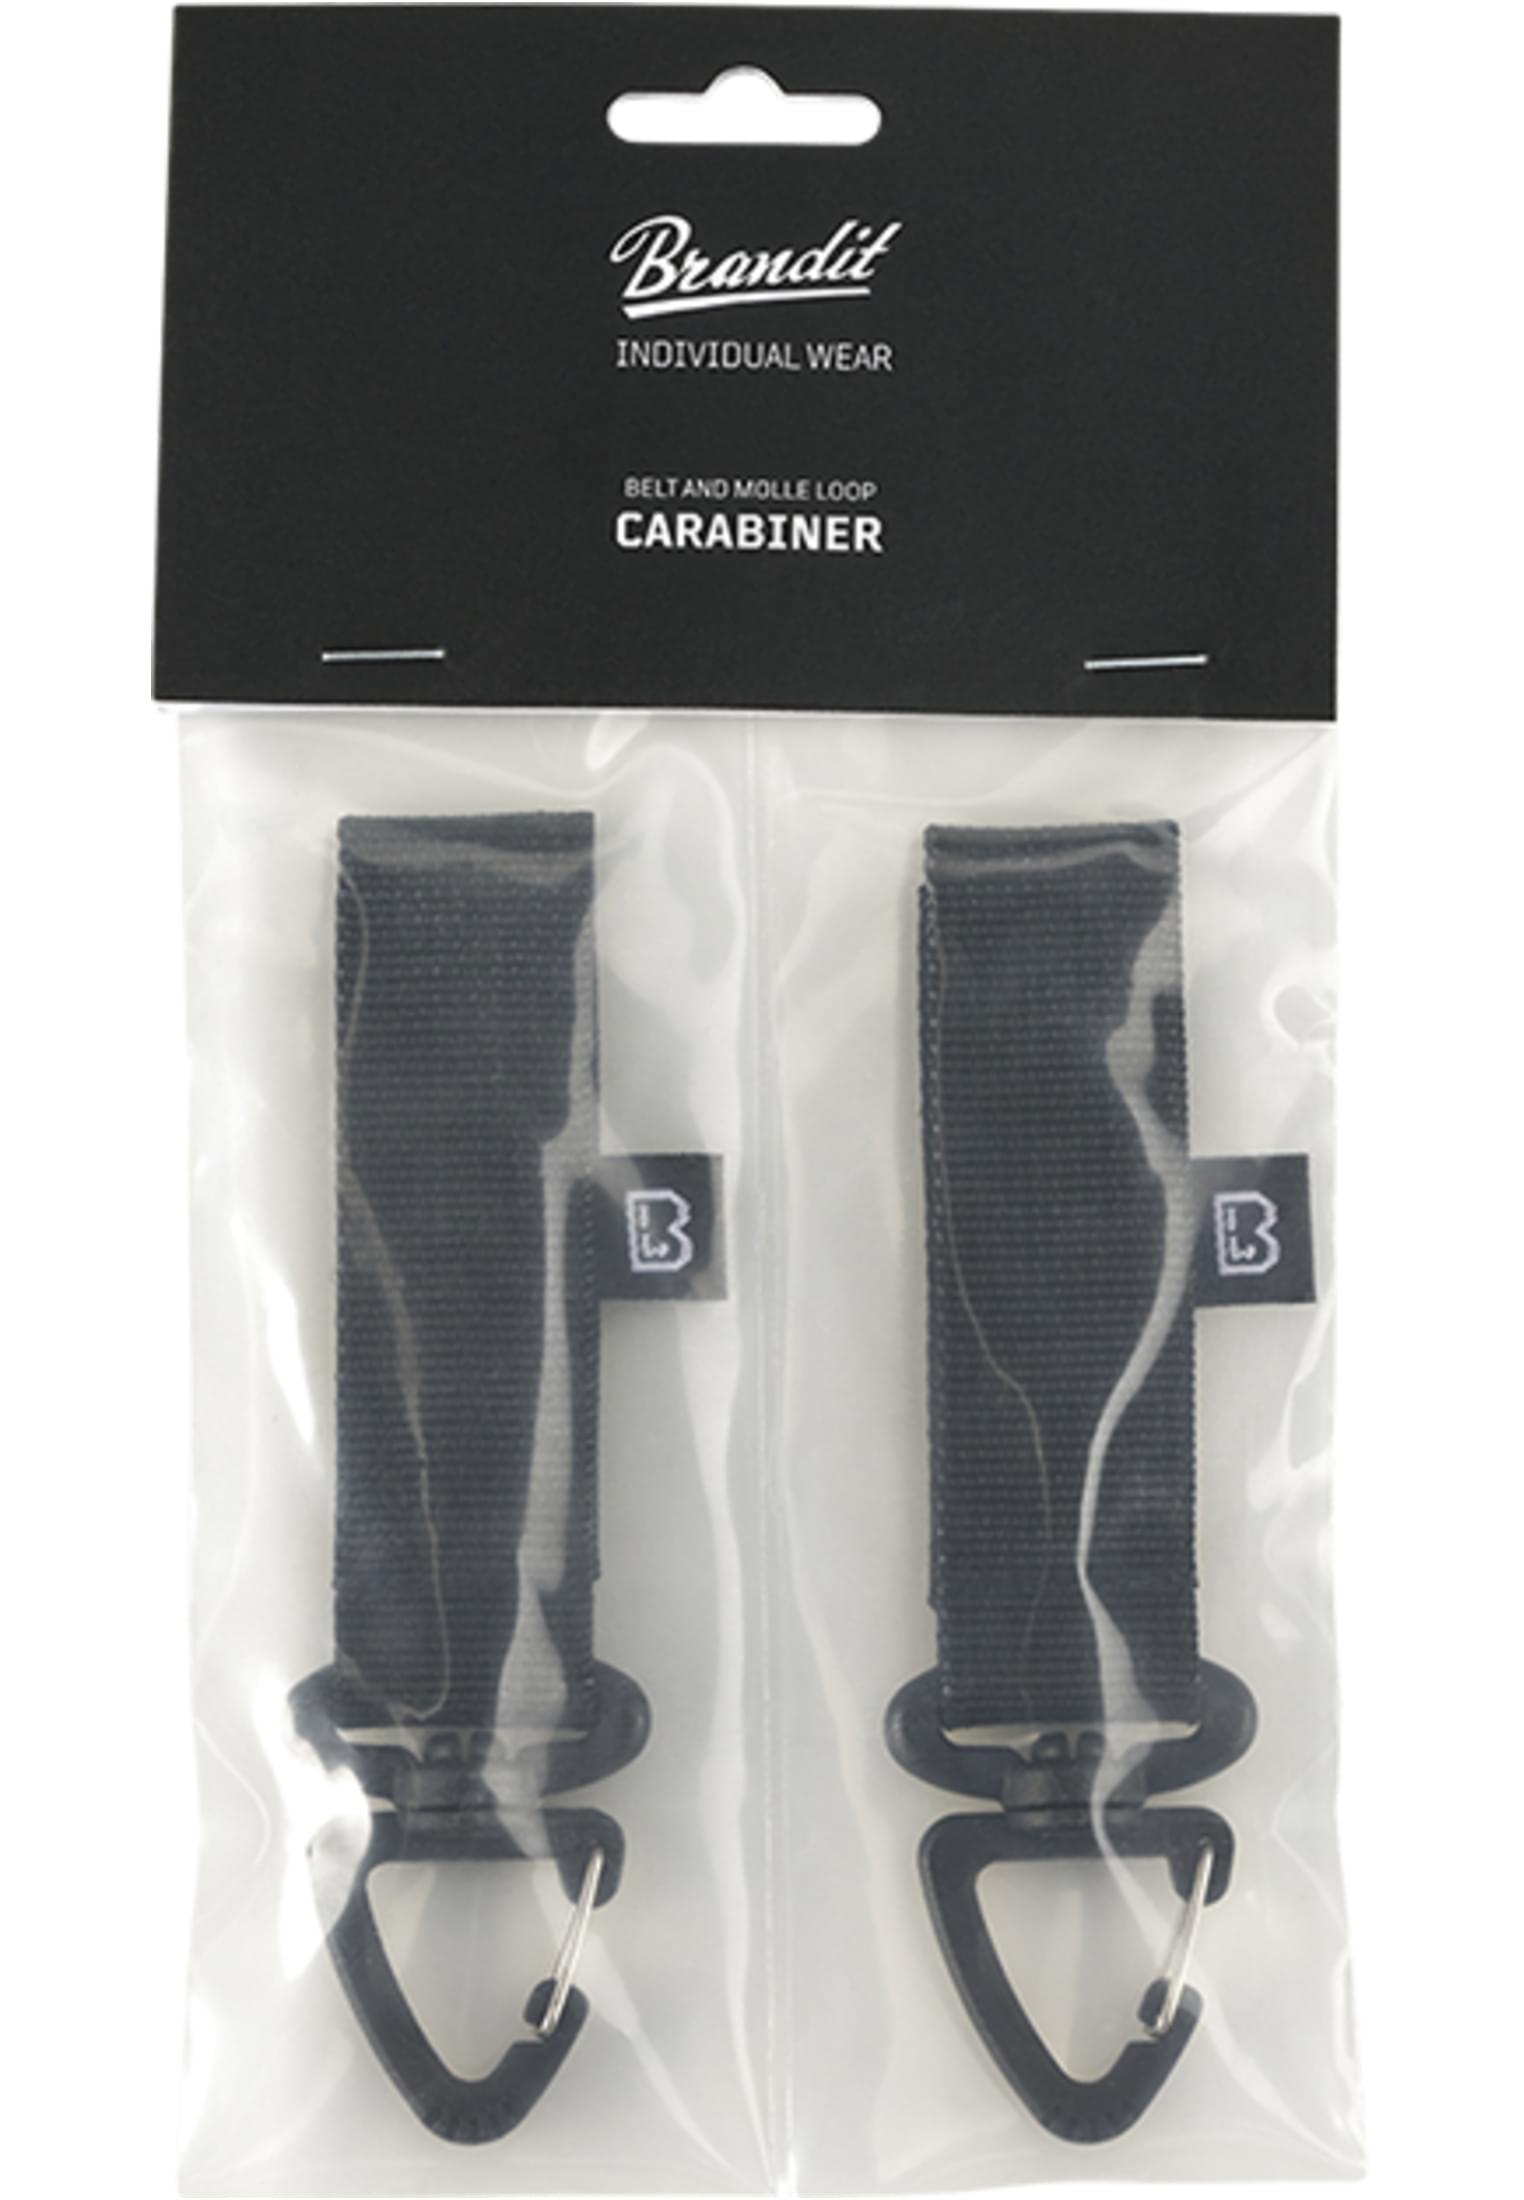 Brandit Belt and Molle Loop Carabiner 2 Pack (Farbe: black / Größe: one size)